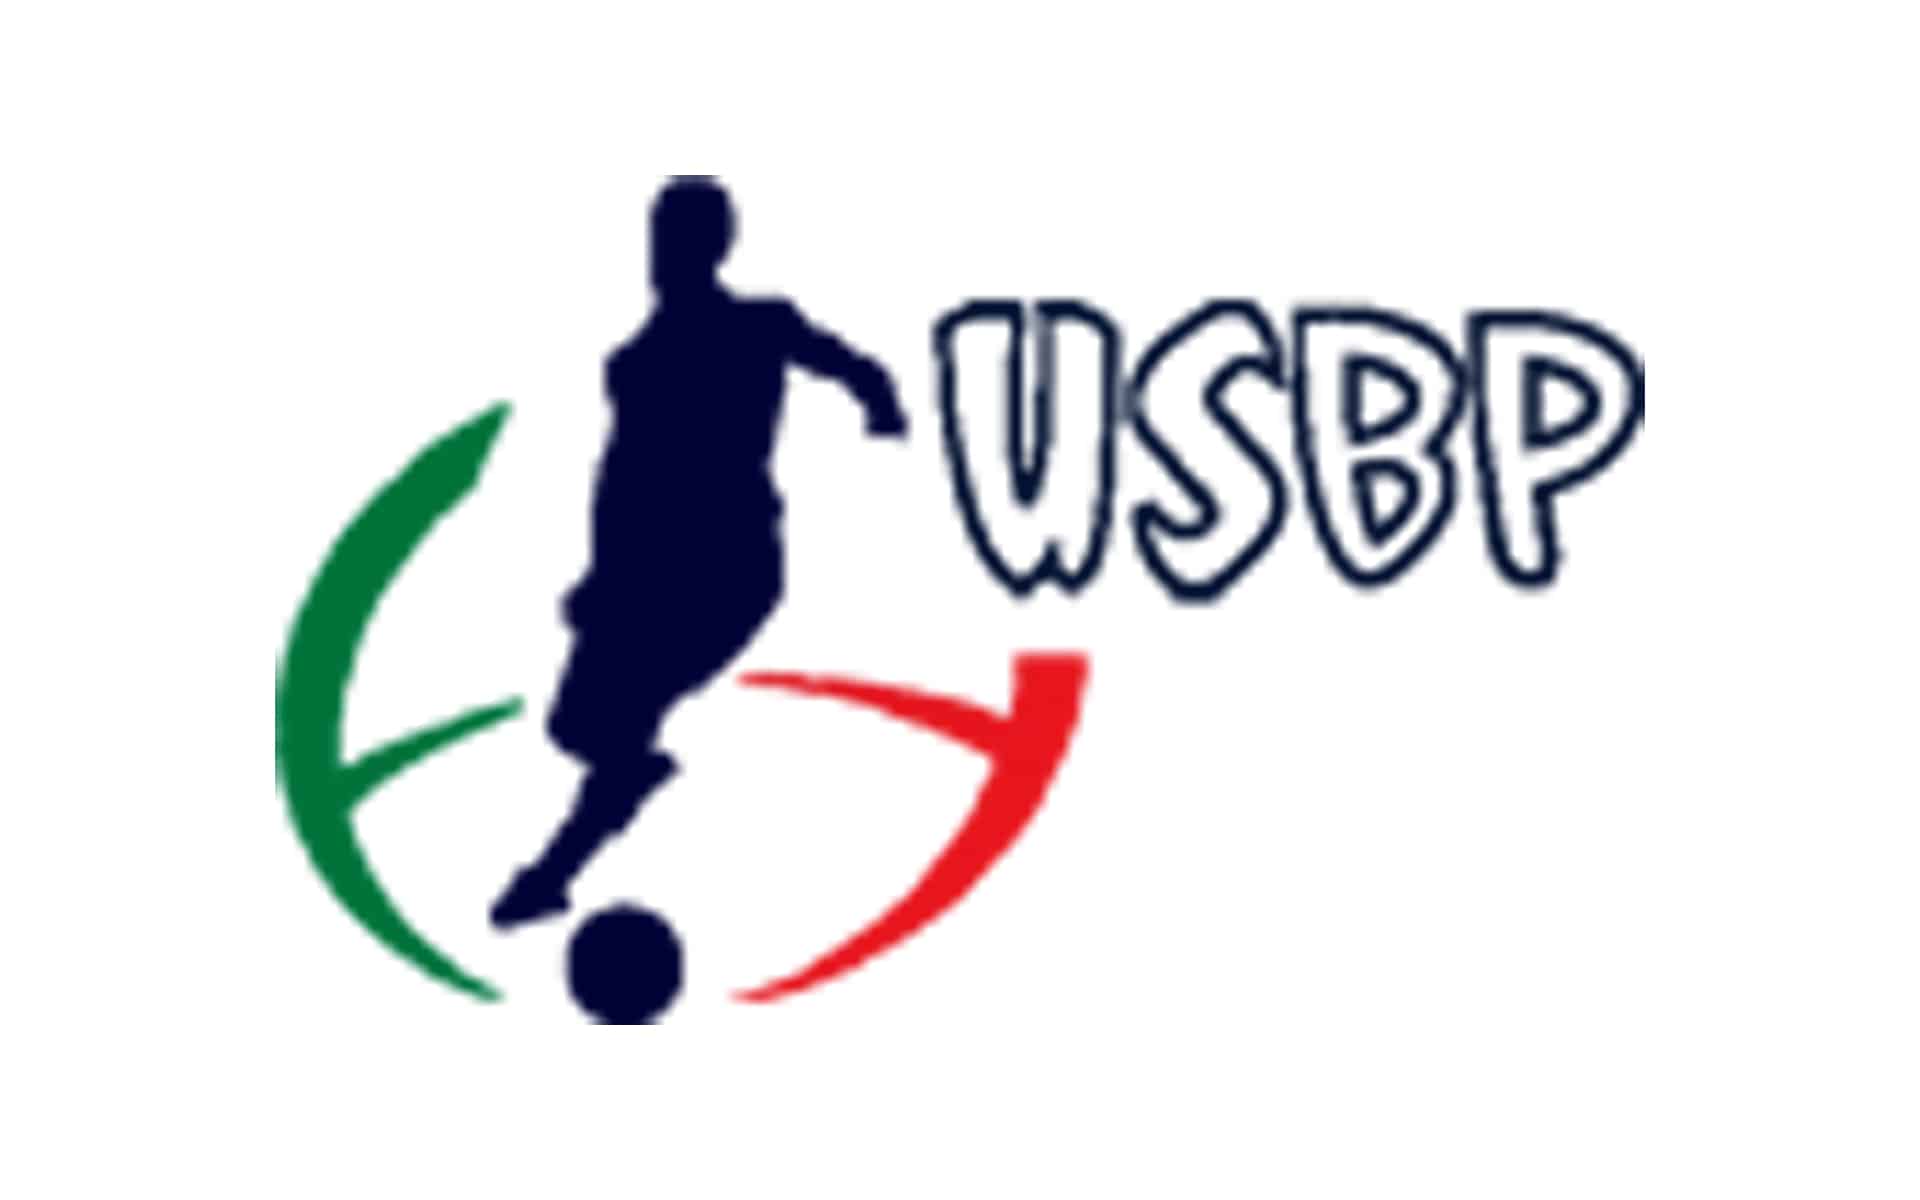 usbp_foot_logo